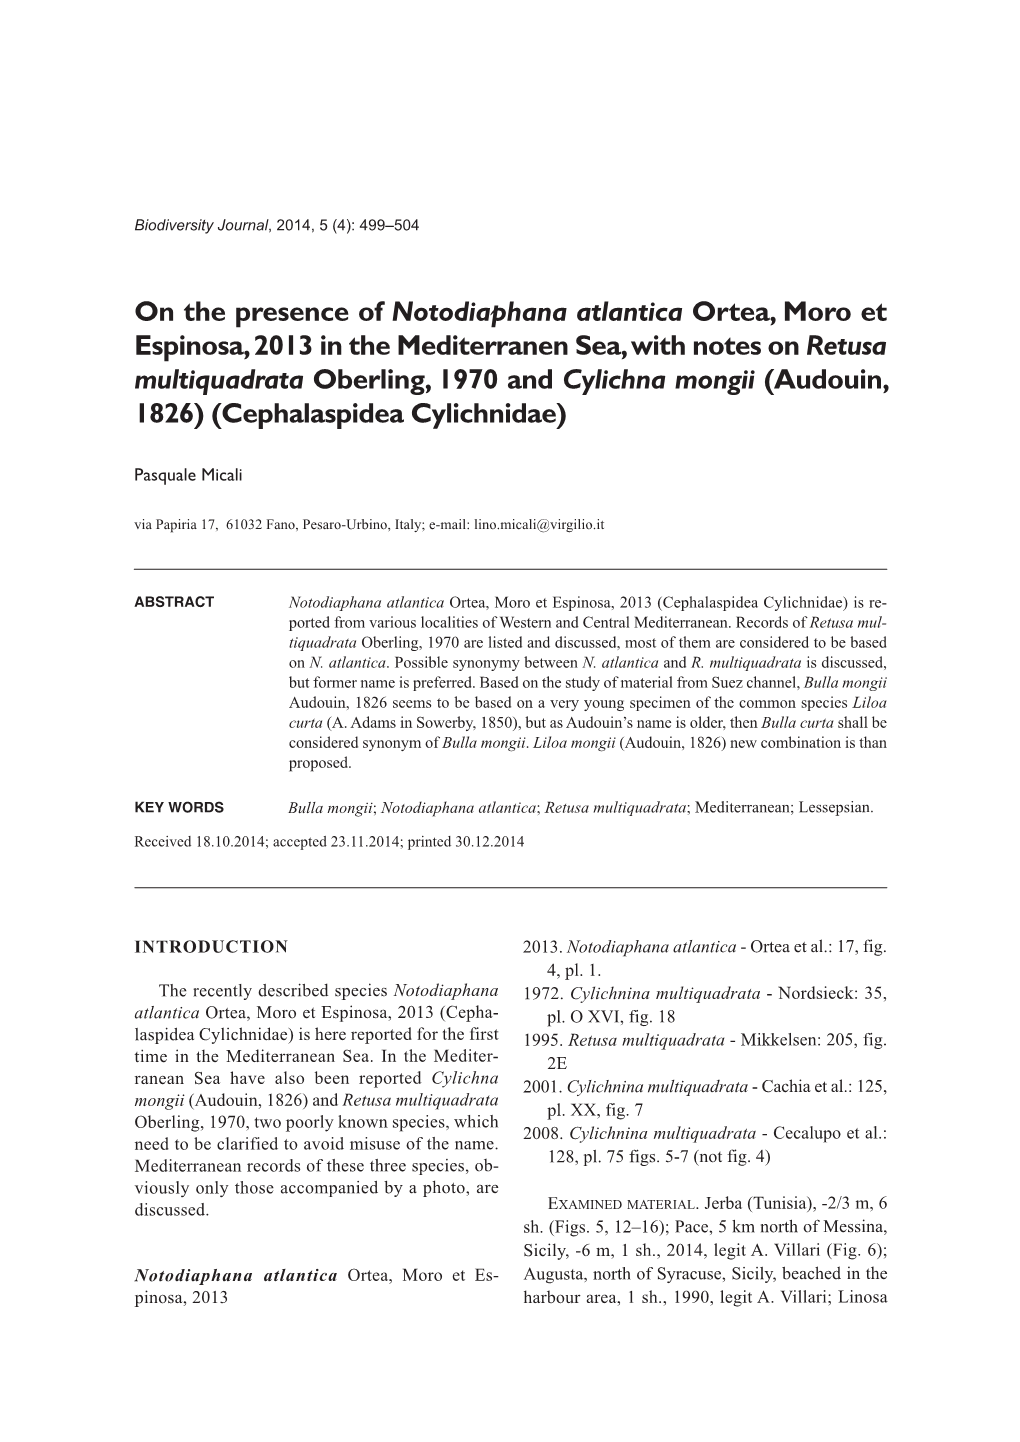 On the Presence of Notodiaphana Atlantica Ortea, Moro Et Espinosa